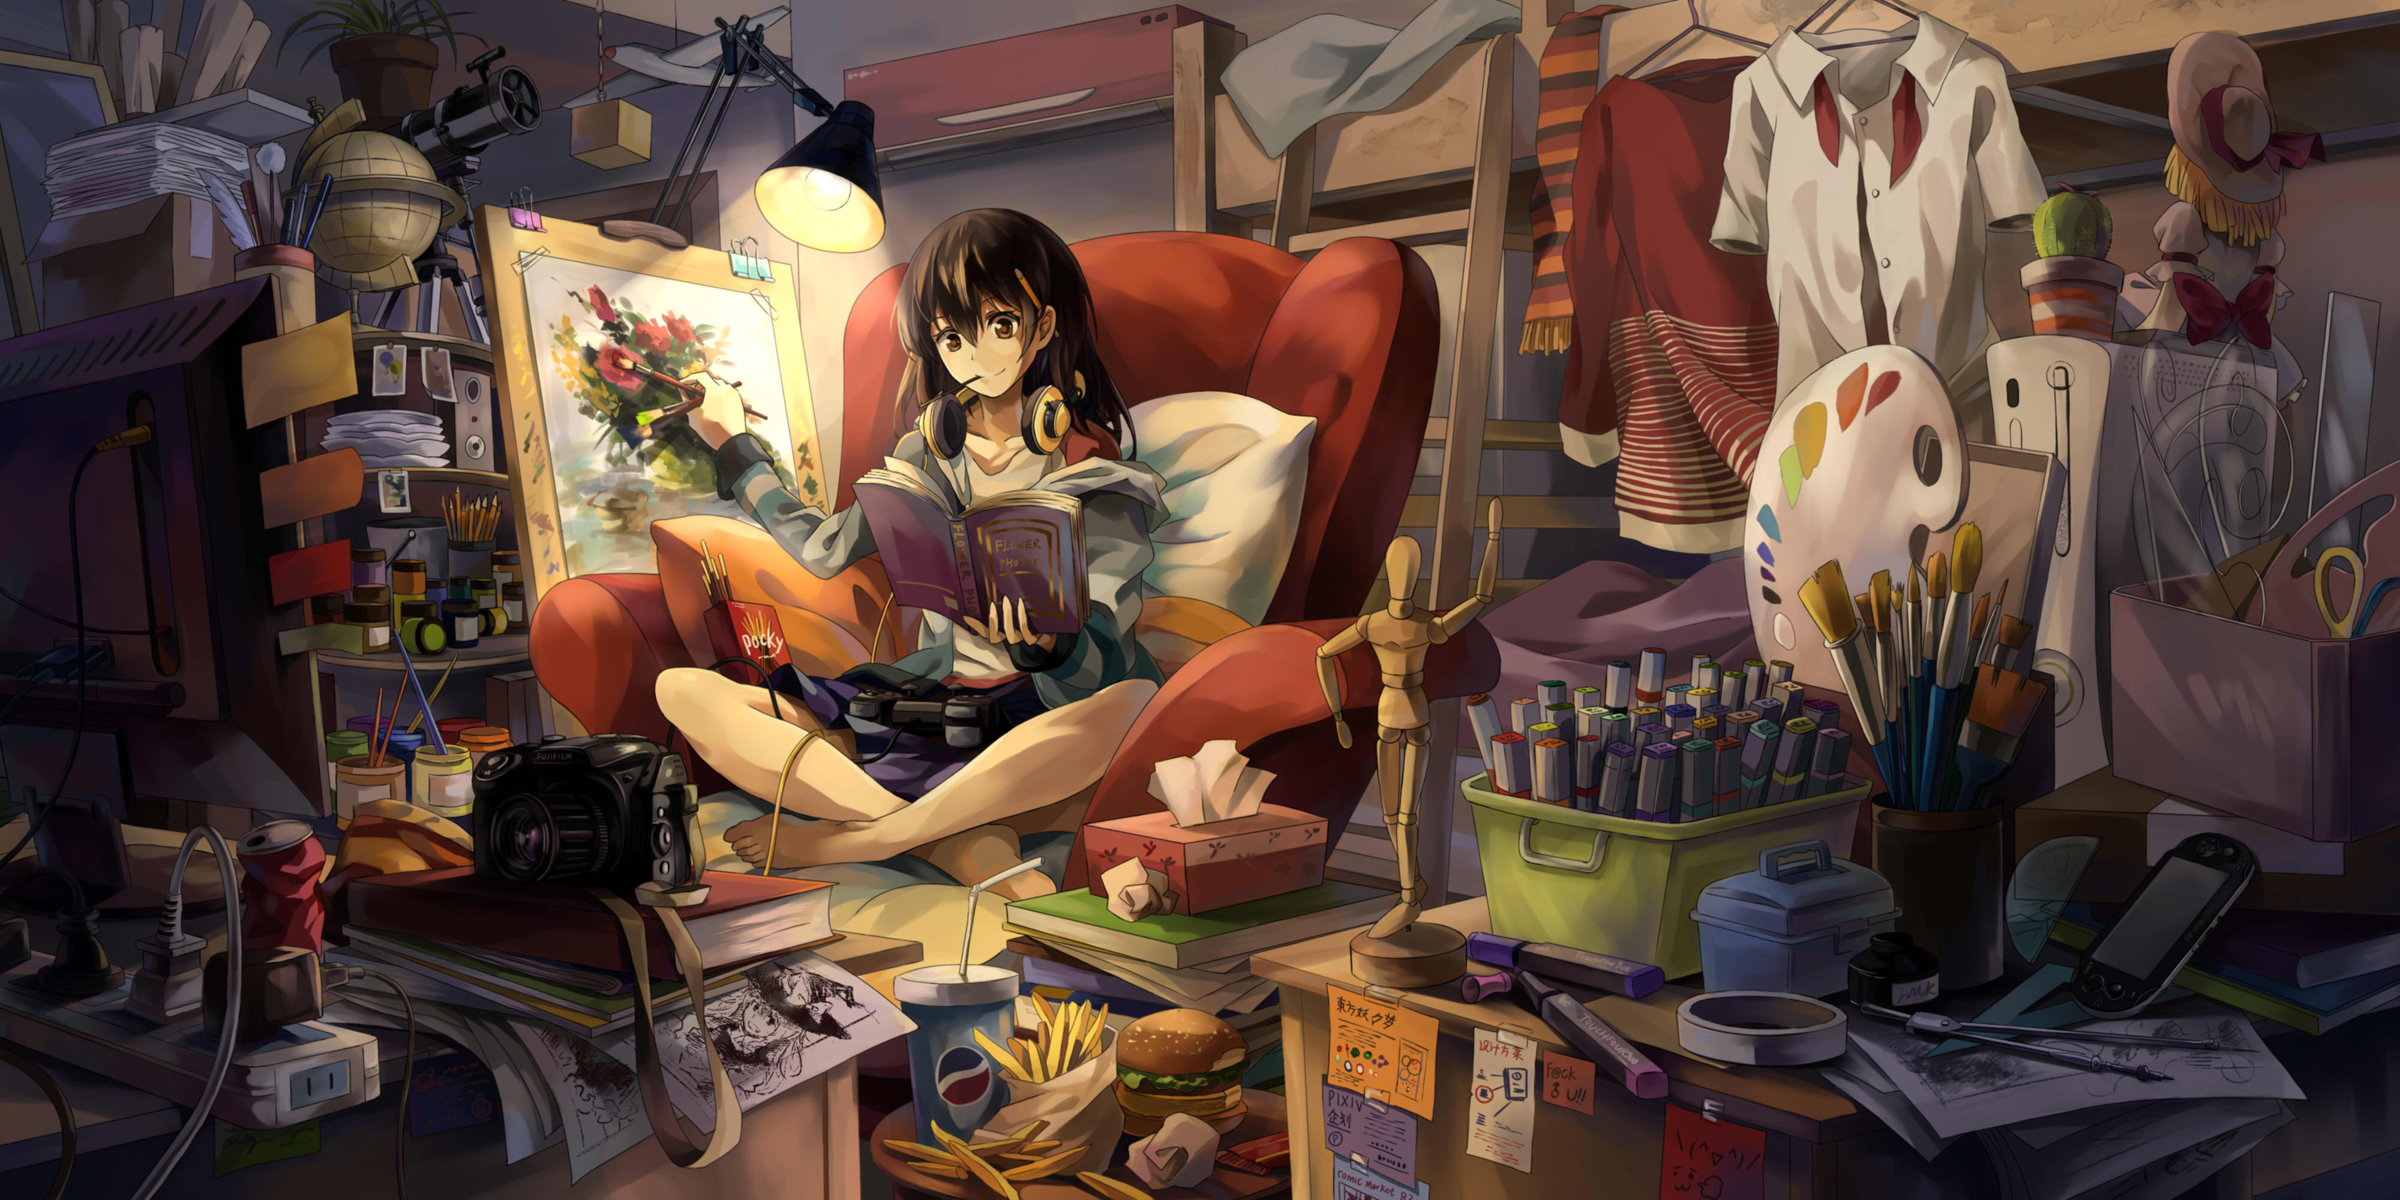 anime, girl, book, easel, headphones, lamp, room